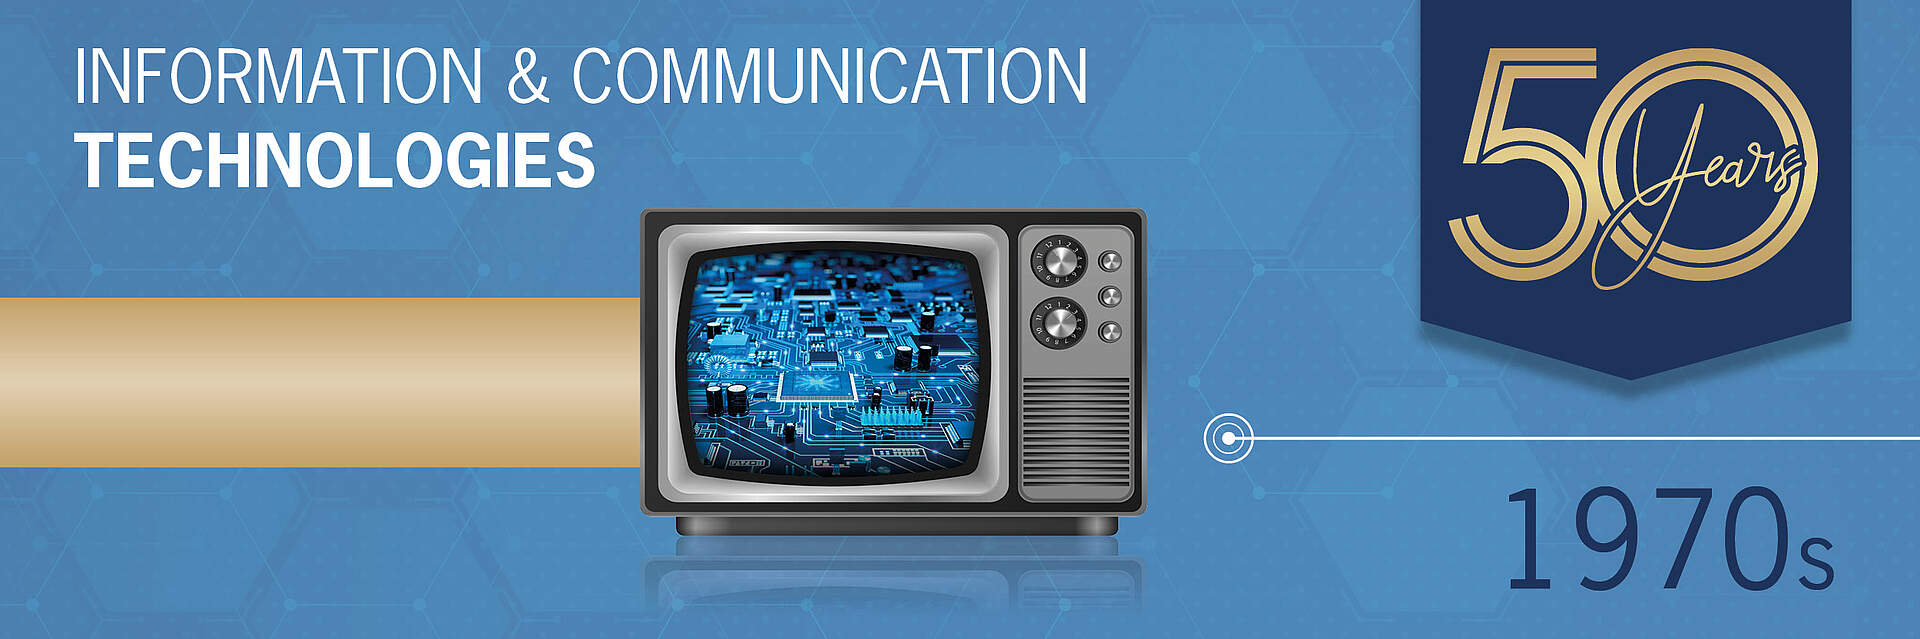 Rutronik Anniversary 1970 Information & Communication Technologies